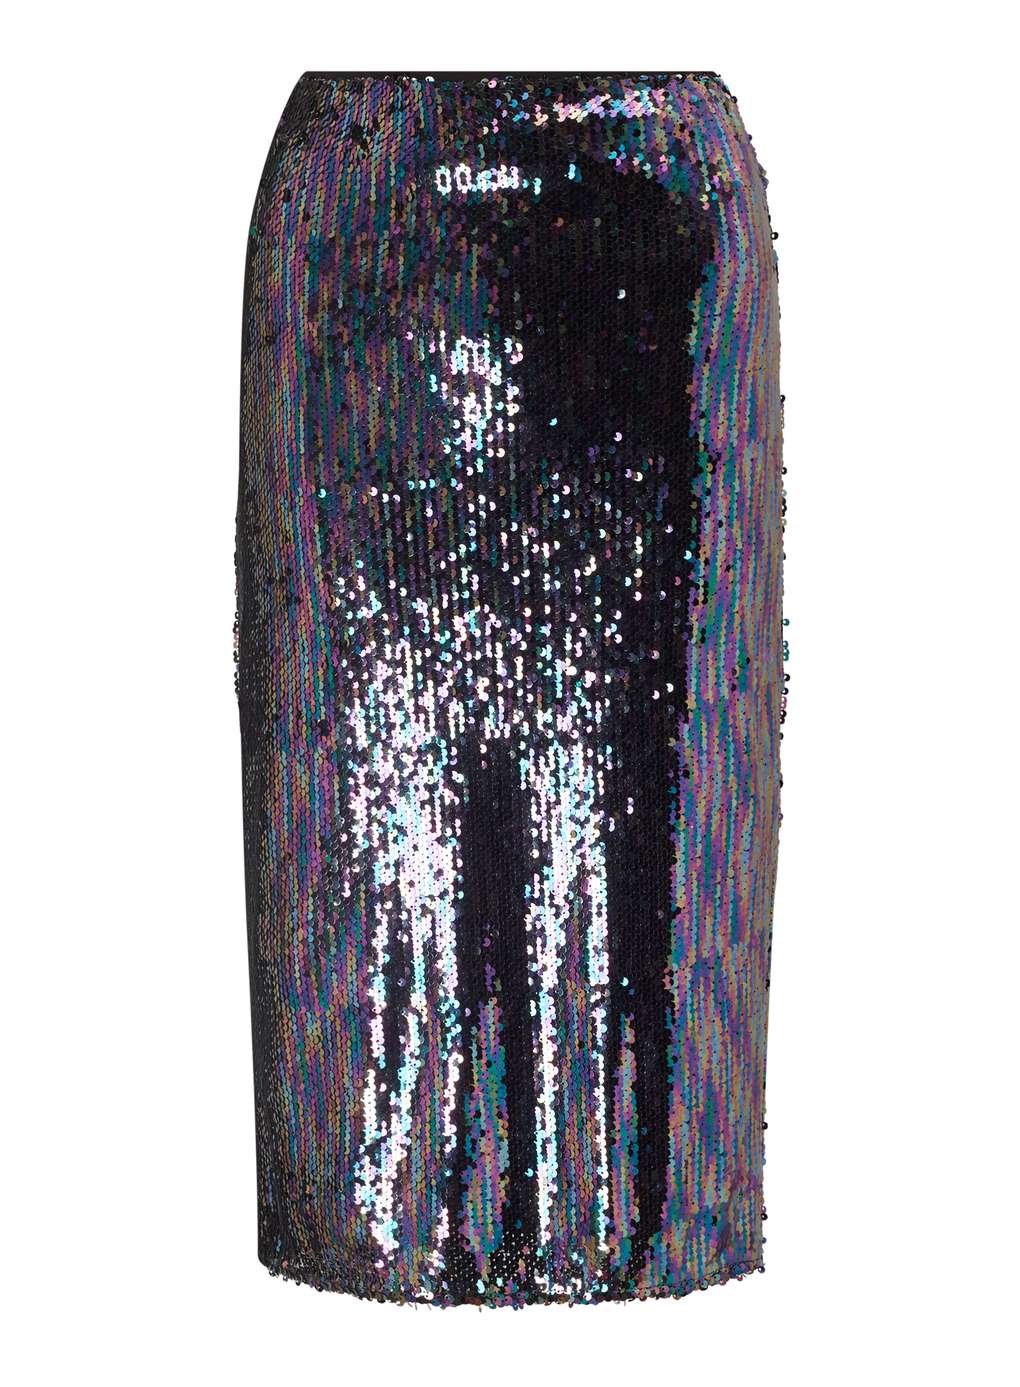 MISS SELFRIDGE Dark Iridescent Sequin Skirt